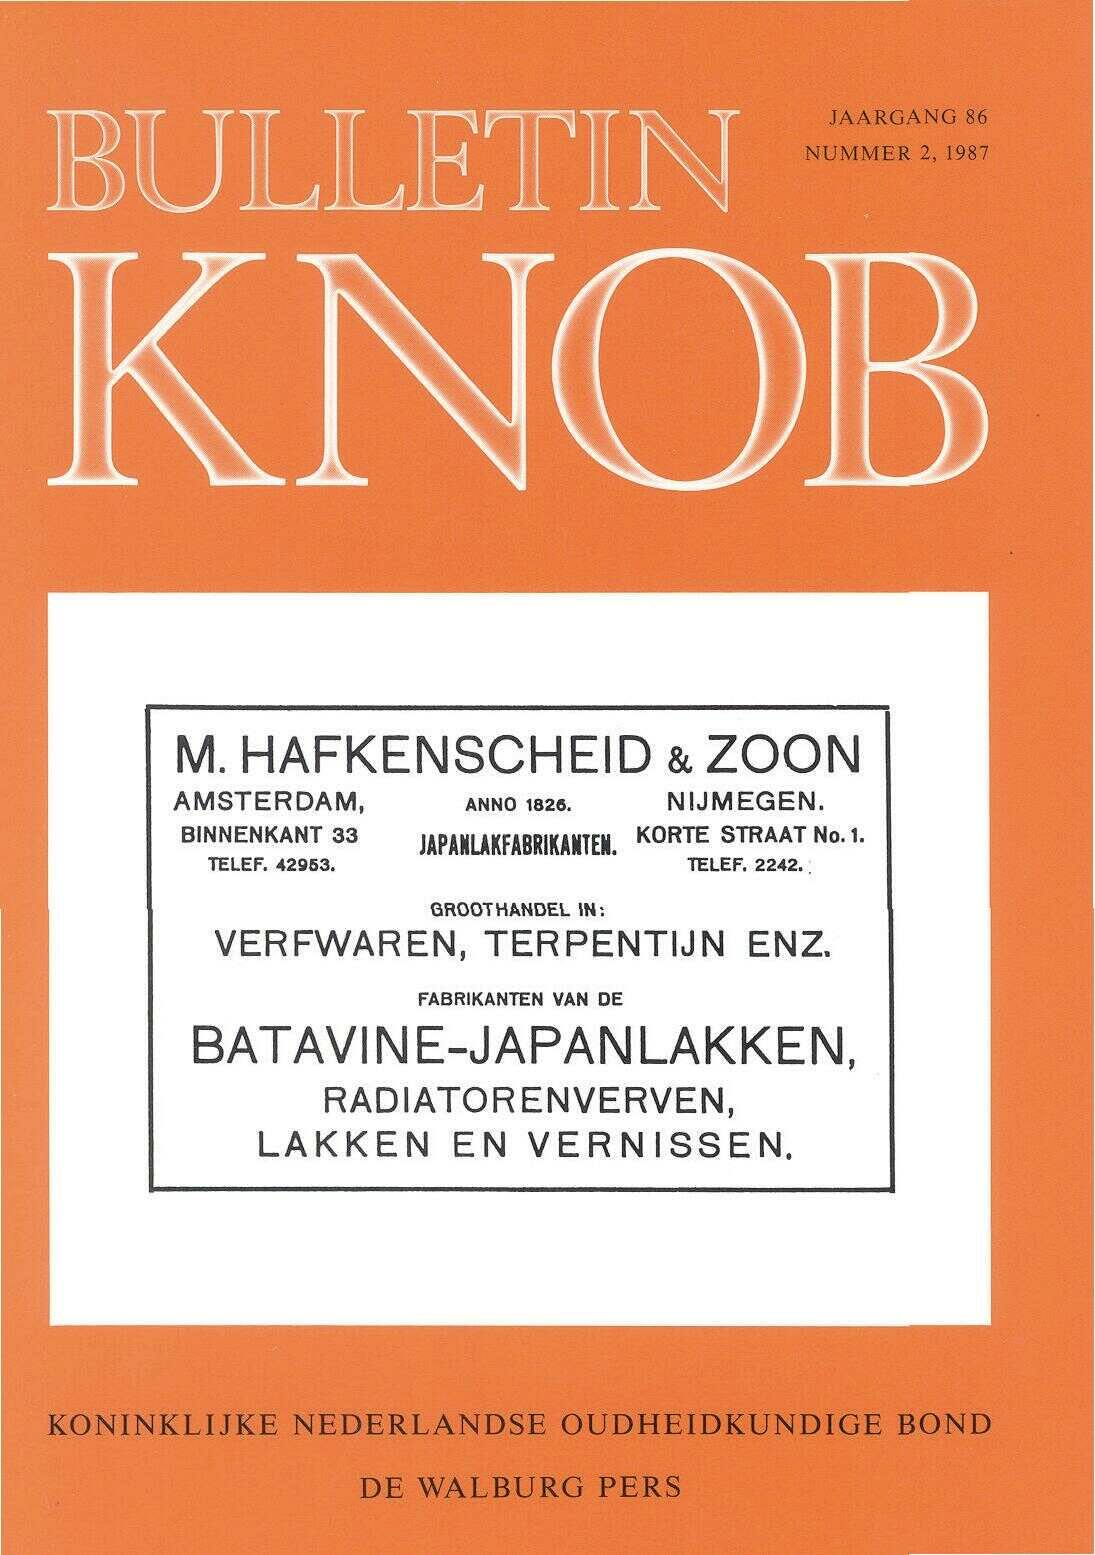 						Toon Bulletin KNOB 86 (1987) 2
					